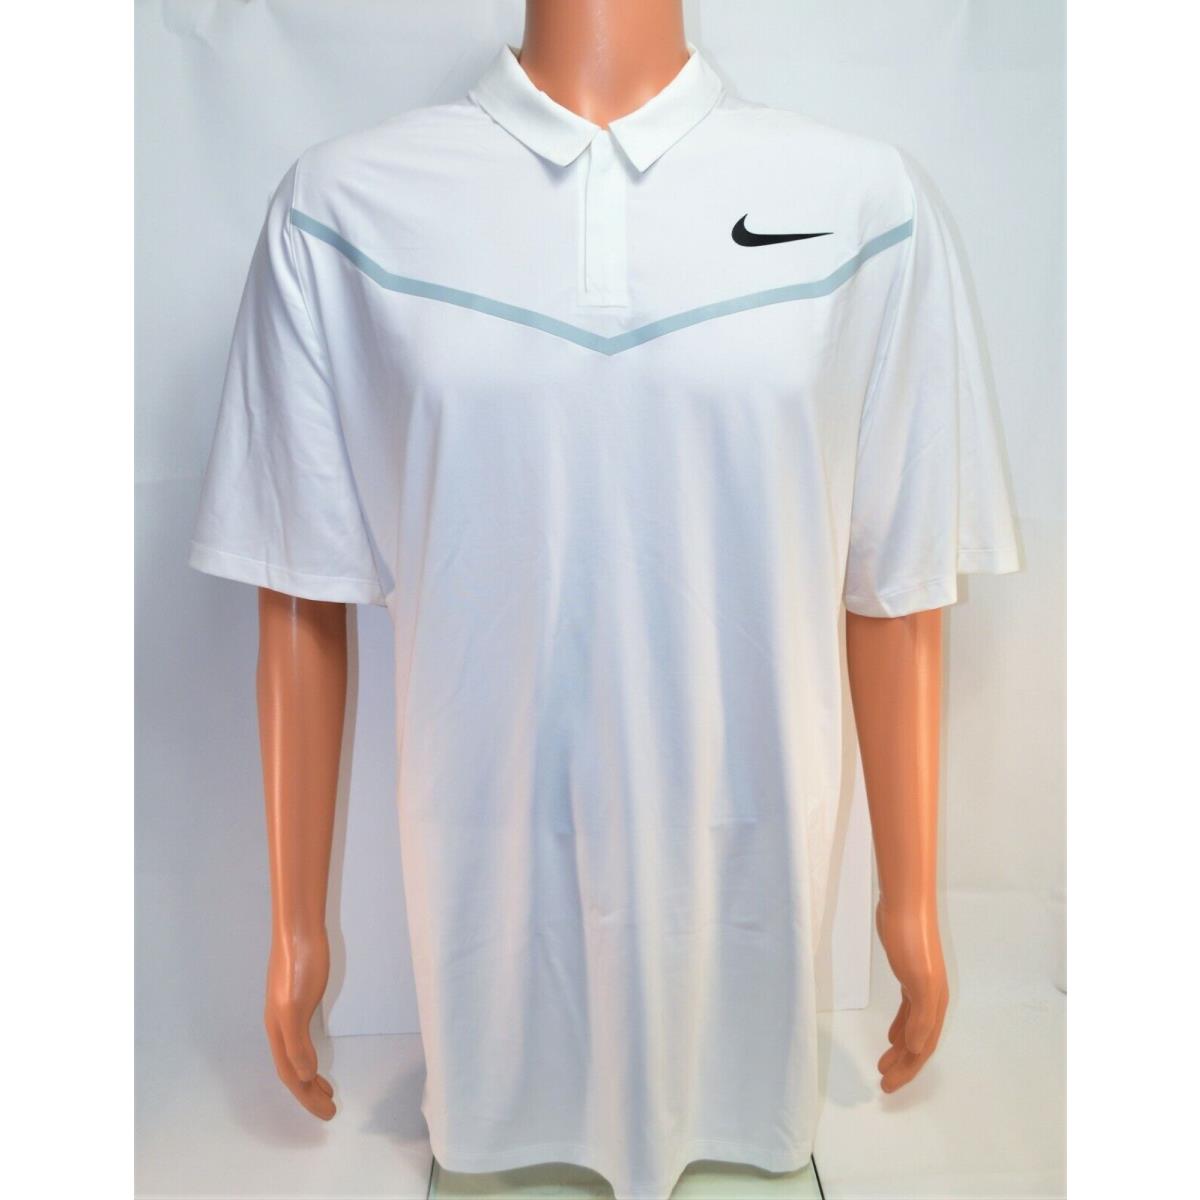 Nike Tiger Woods TW Velocity Max White Golf Polo Shirt Sz XX Large 833163 100